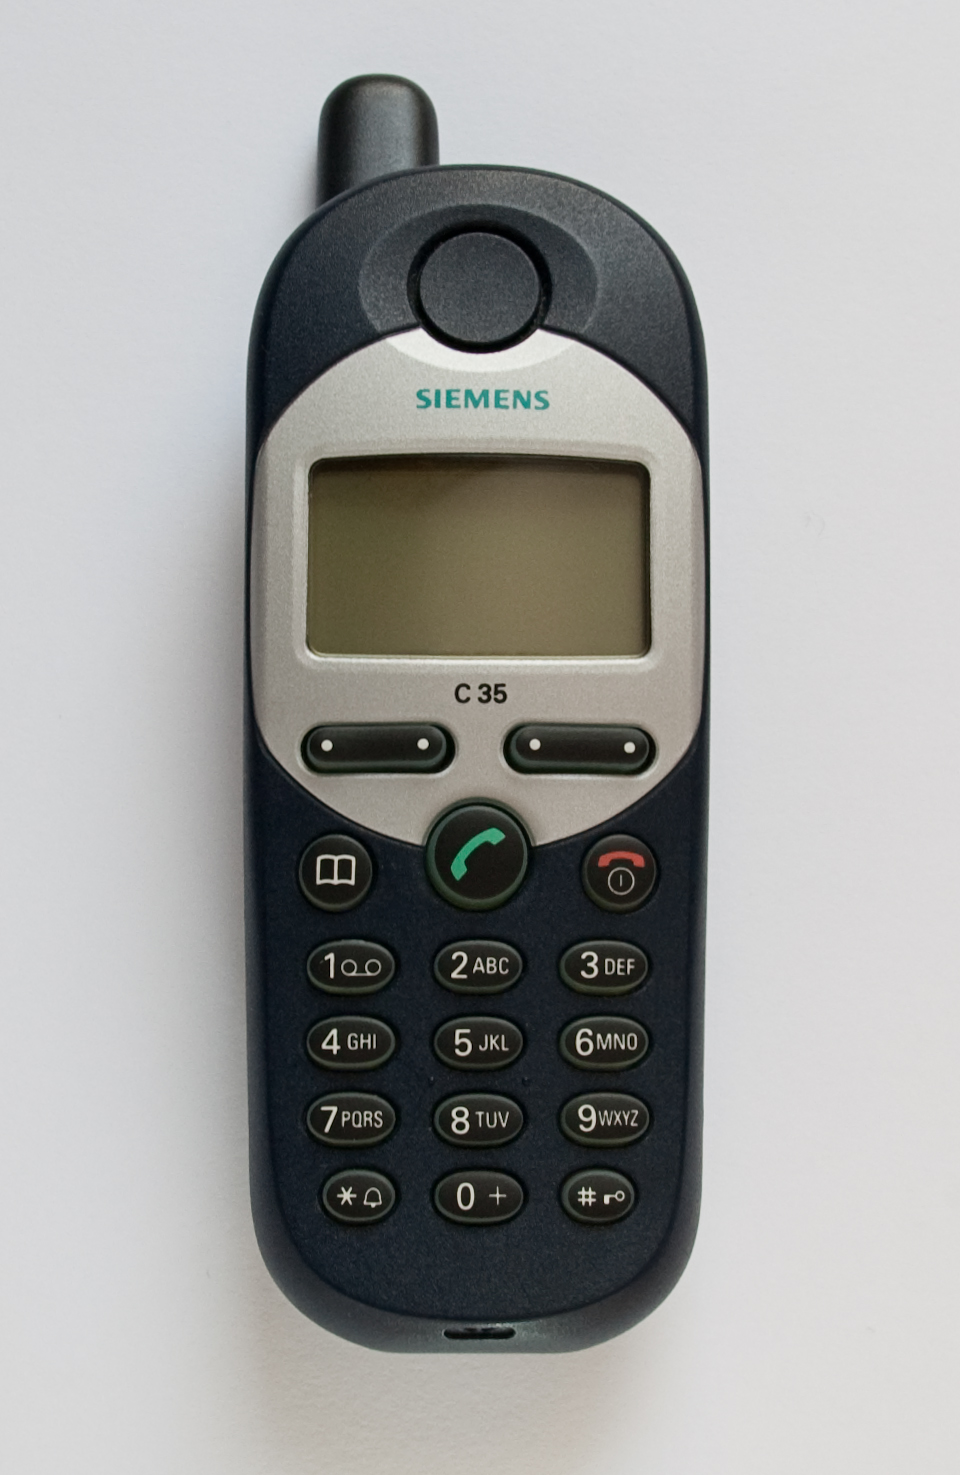 Siemens_C35i_mobile_phone.jpg